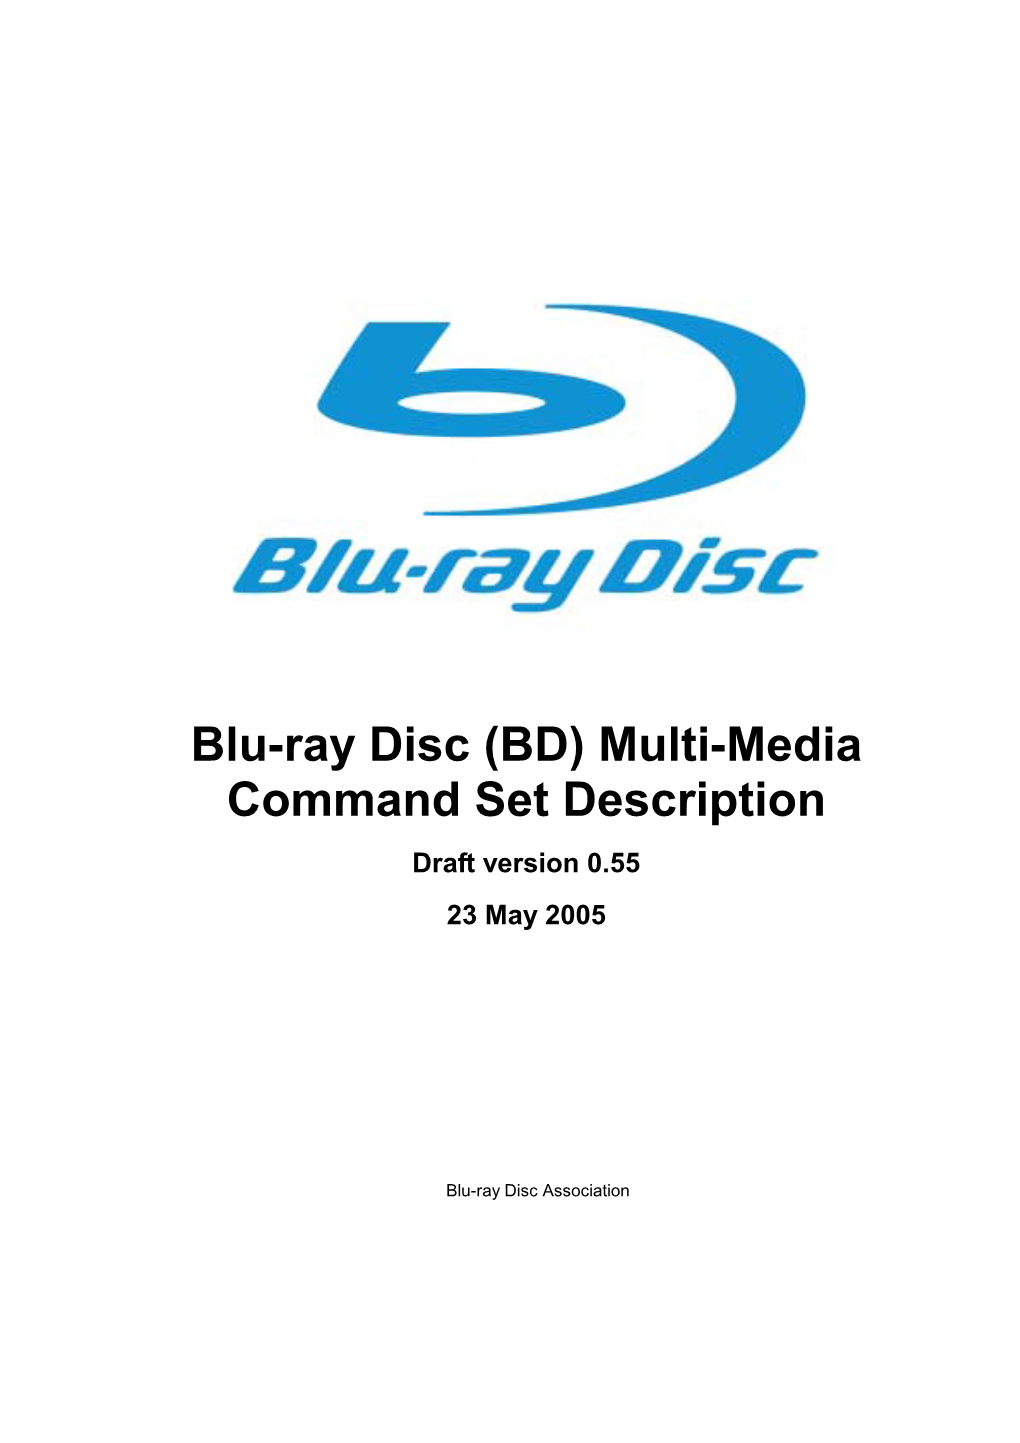 Blu-Ray Disc (BD) Multi-Media Command Set Description Draft Version 0.55 23 May 2005